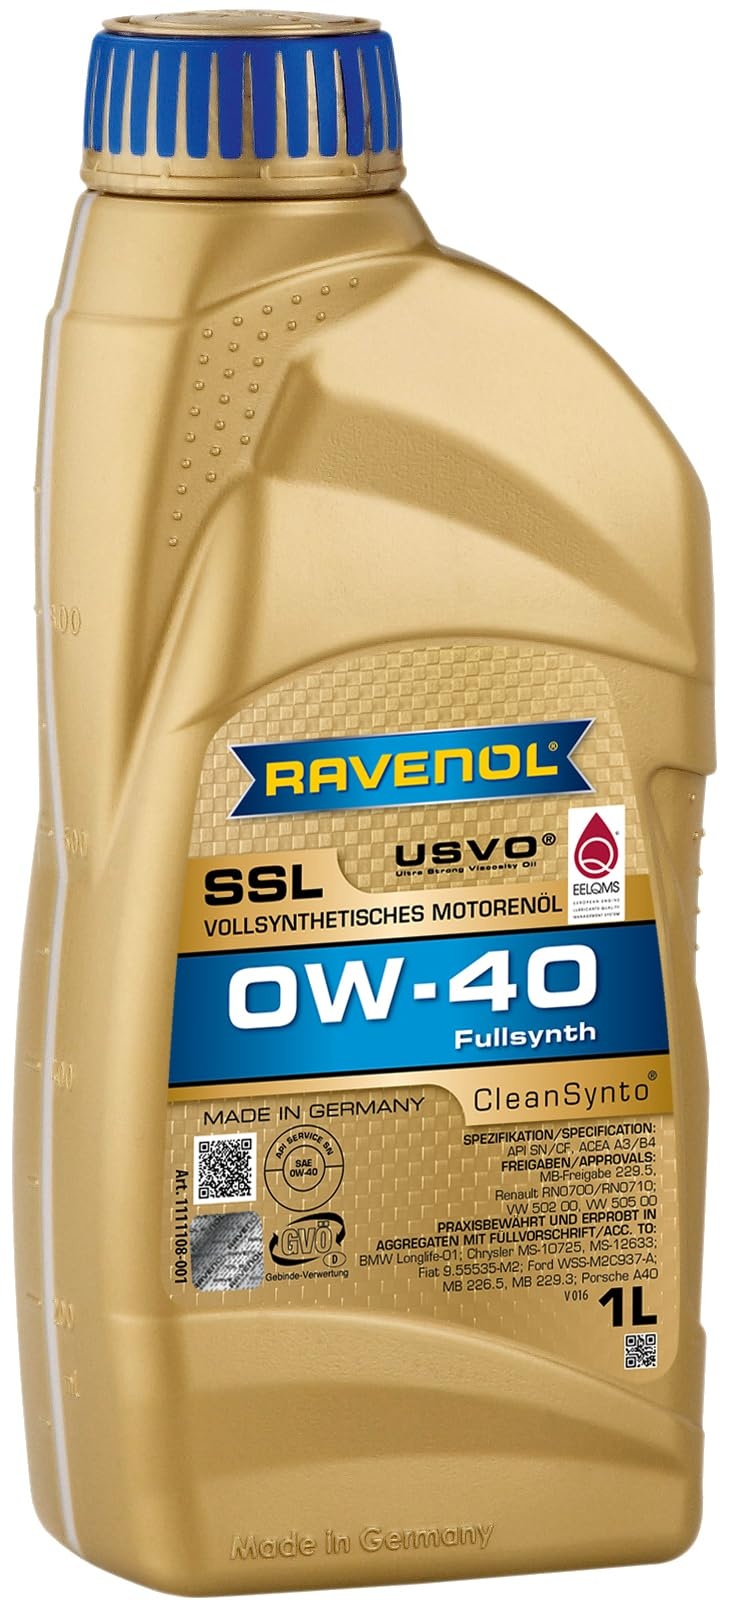 ravenol ssl 0w-40